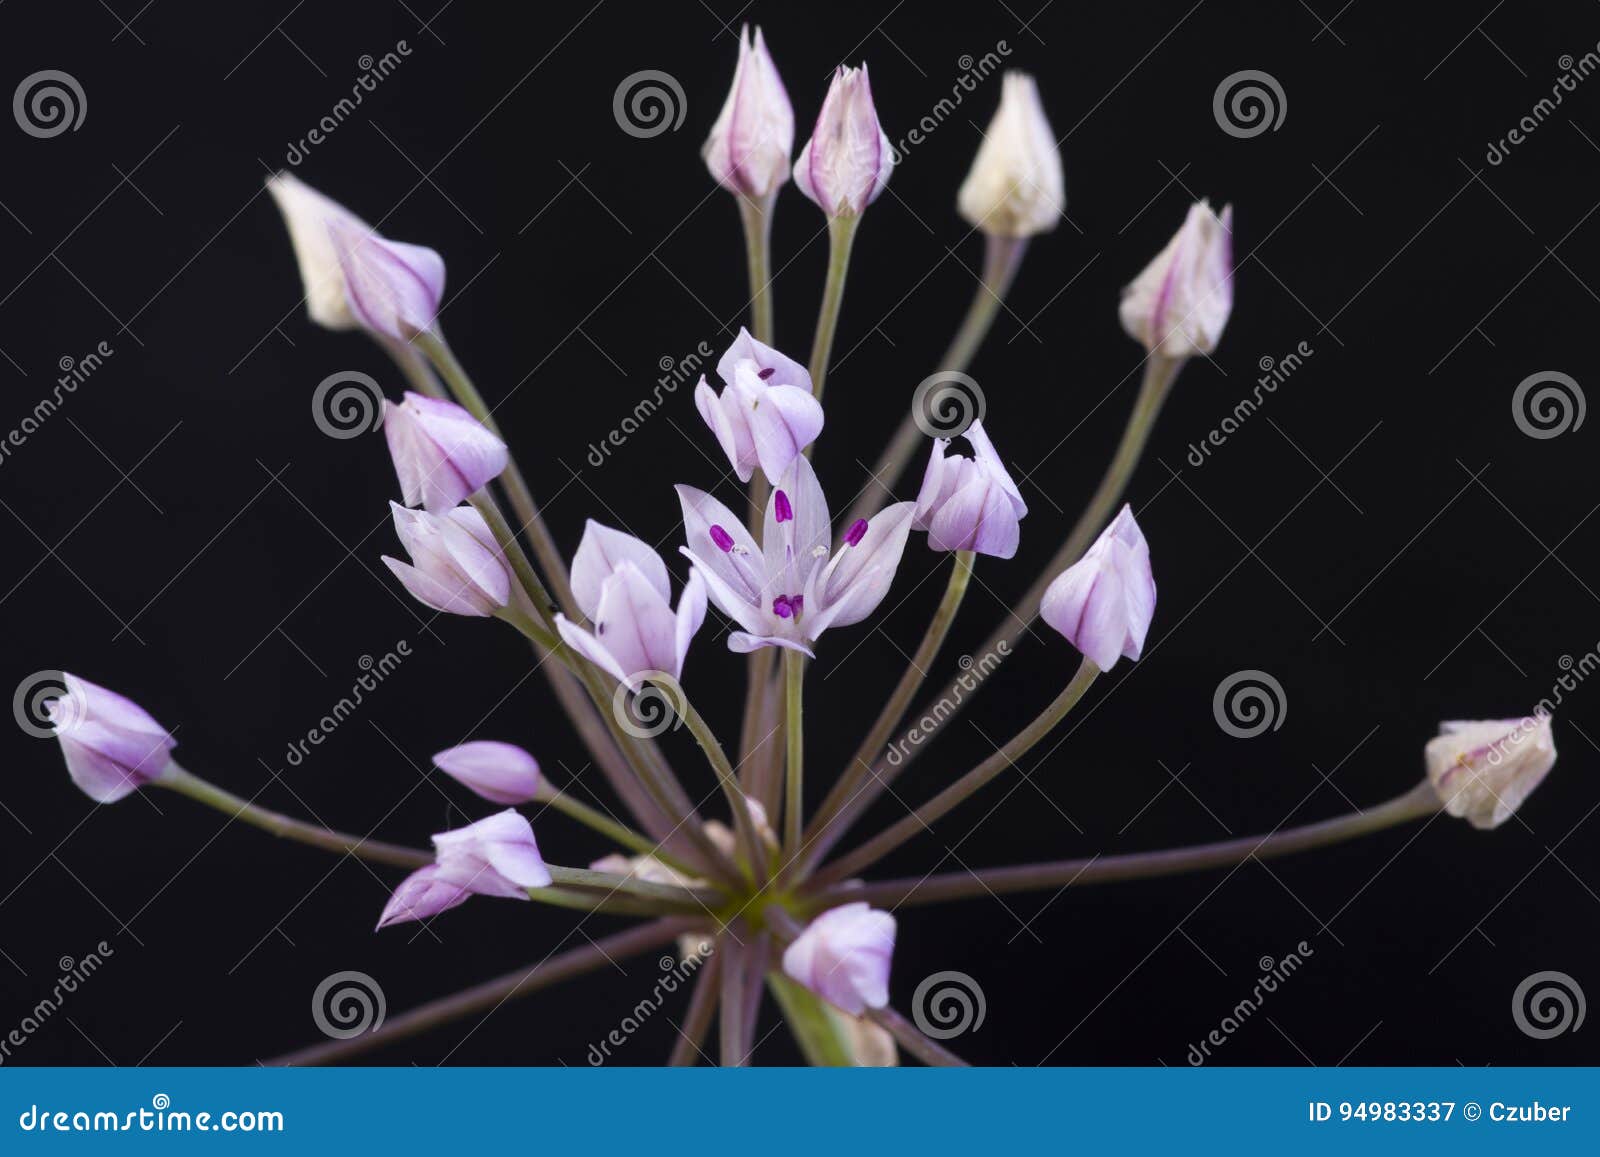 Closeup Allium Praecox Wild Onion Flower Stock Image Image Of Closeup Stem 94983337